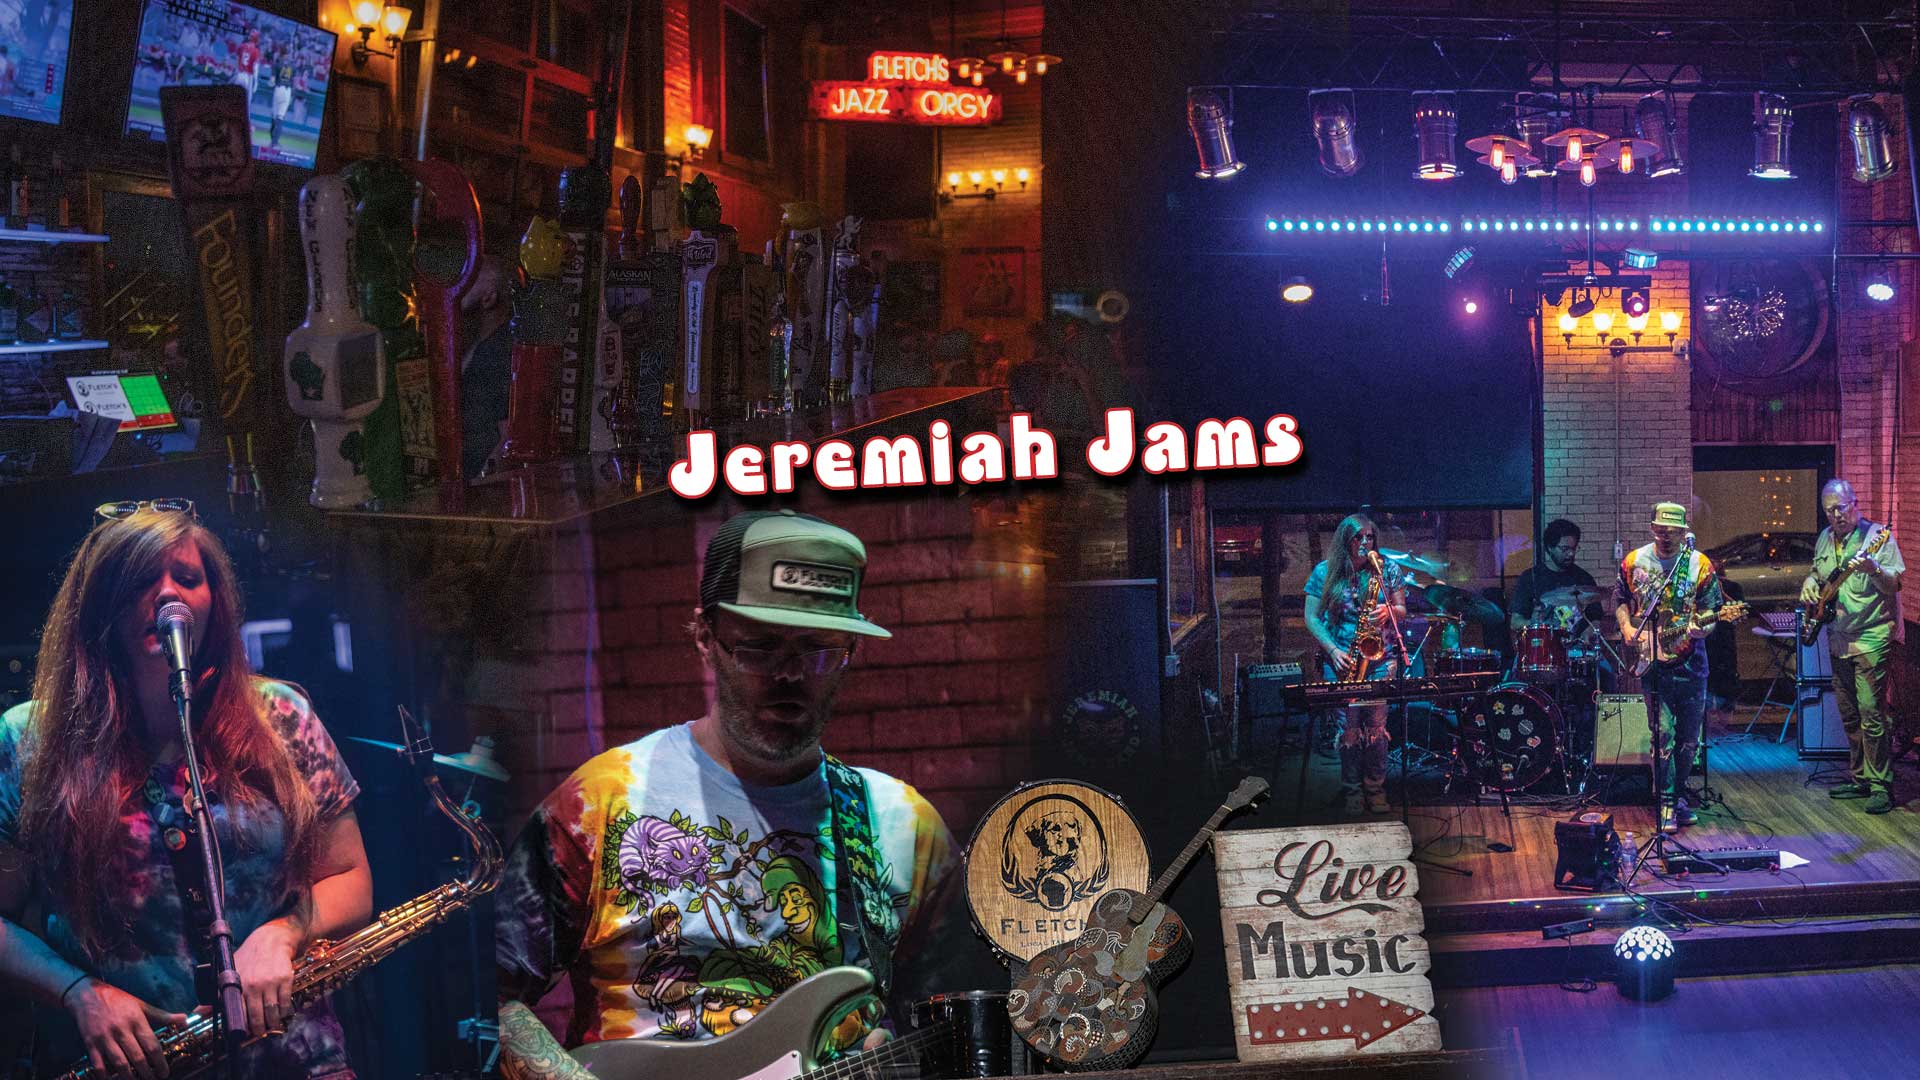 Jeramiah Jams band at Fletch's bar in Oshkosh